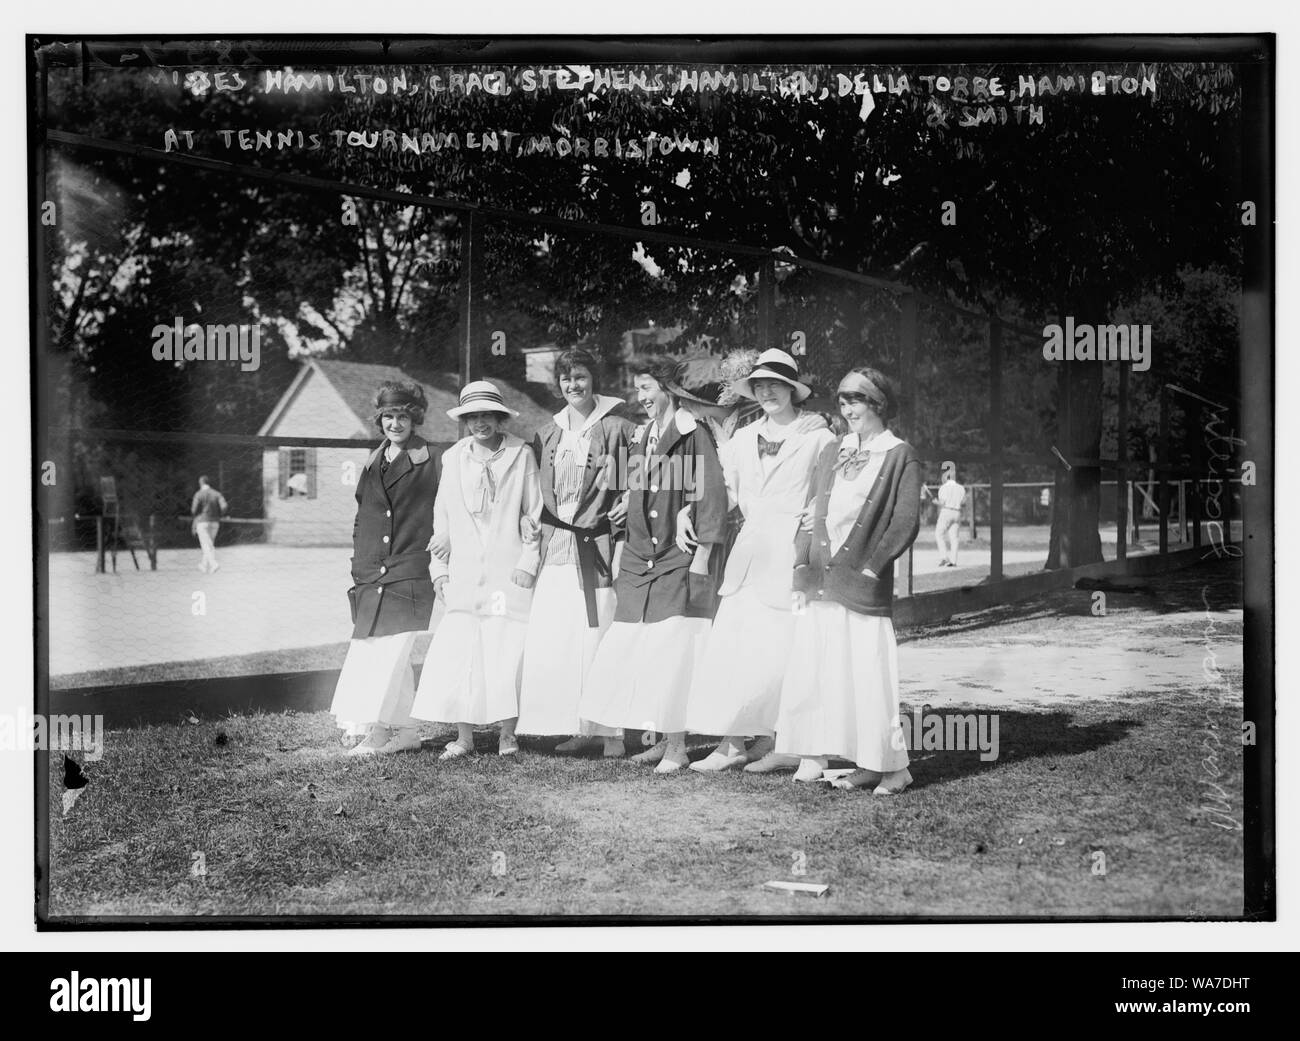 At tennis tournament, Morristown - Misses Hamilton, Crag, Stephens, Hamilton, [Gertrude] Della Torre, Hamilton and Smith Stock Photo